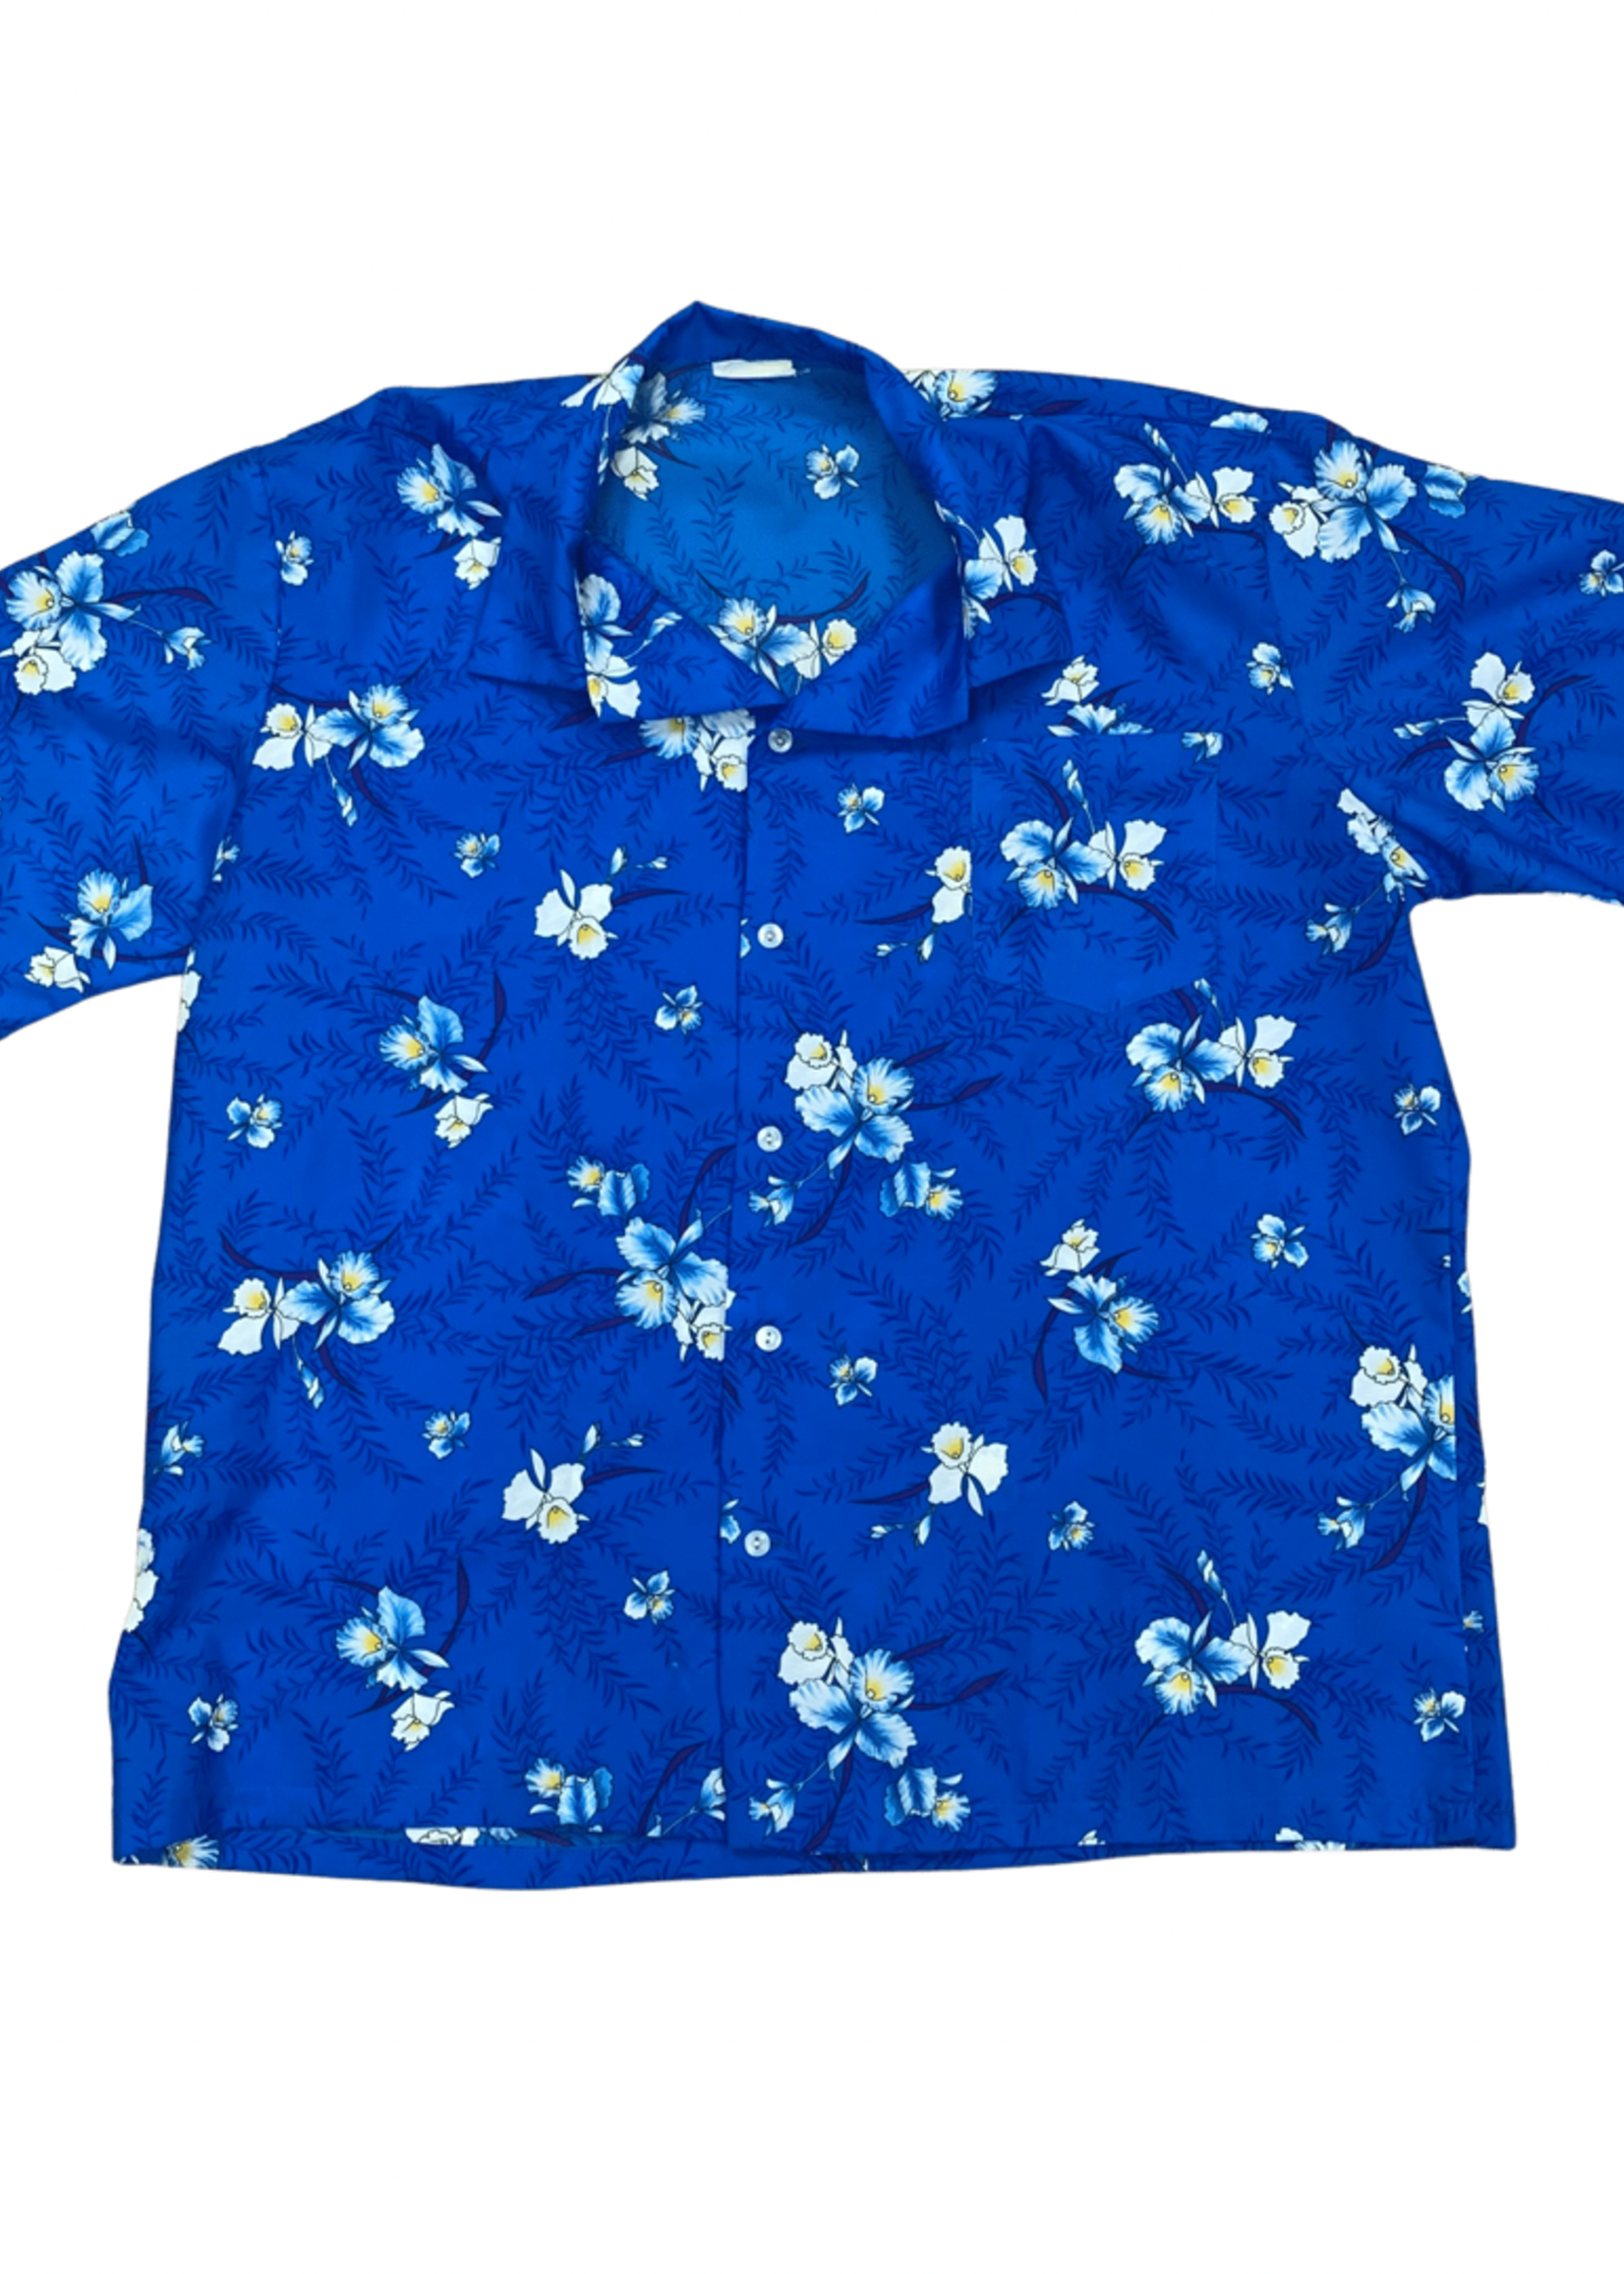 Mission Zero Men's Vintage Aloha Shirt - Premium Aikane Blue Orchid  2XLarge